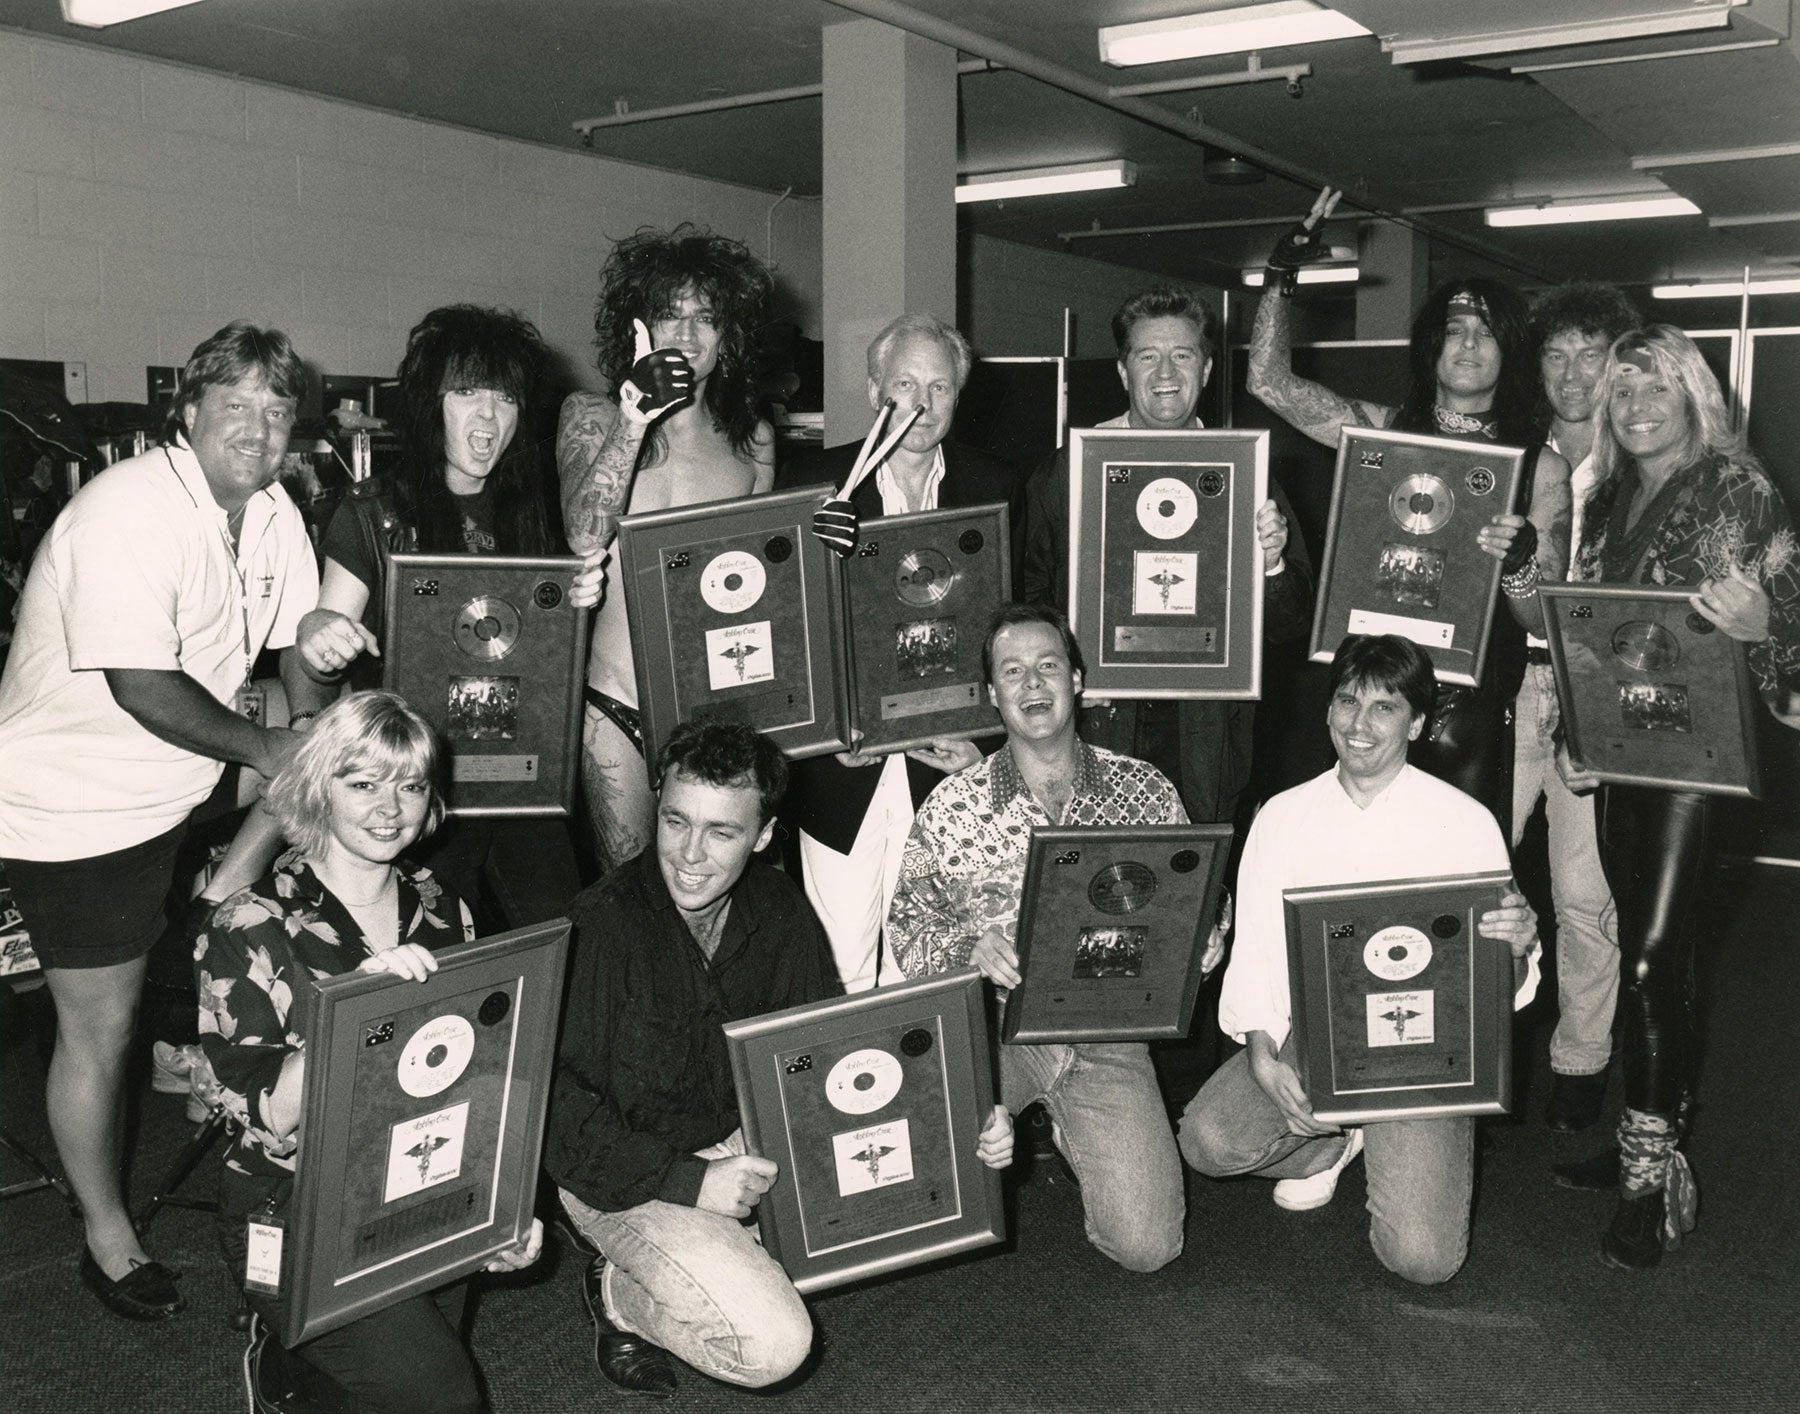 Motley Crue celebrates Australian RIAA success with Girls Girls Girls and Dr. Feelgood circa 1990